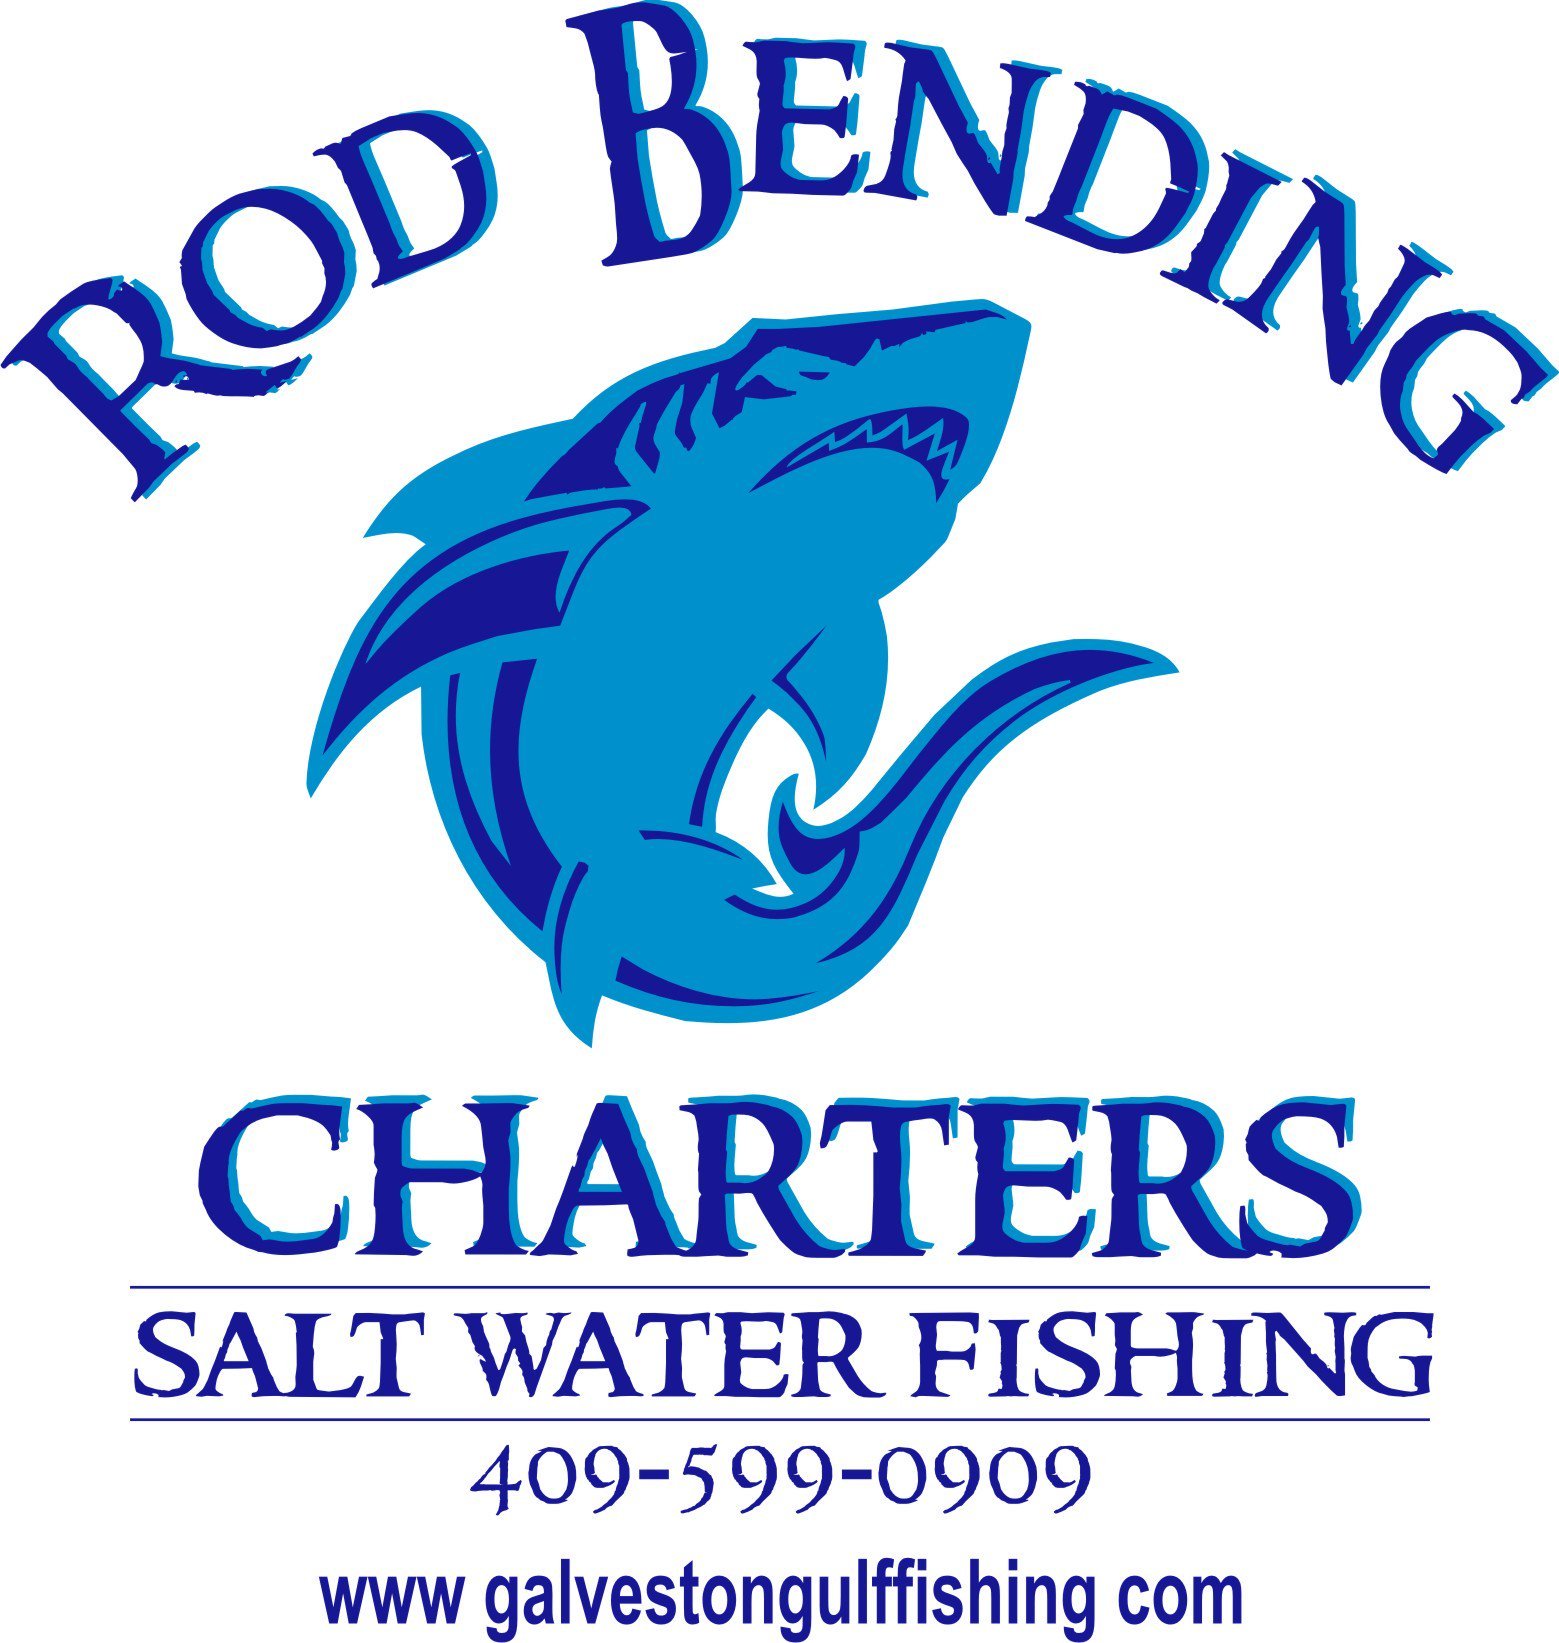 Rod Bending Charters